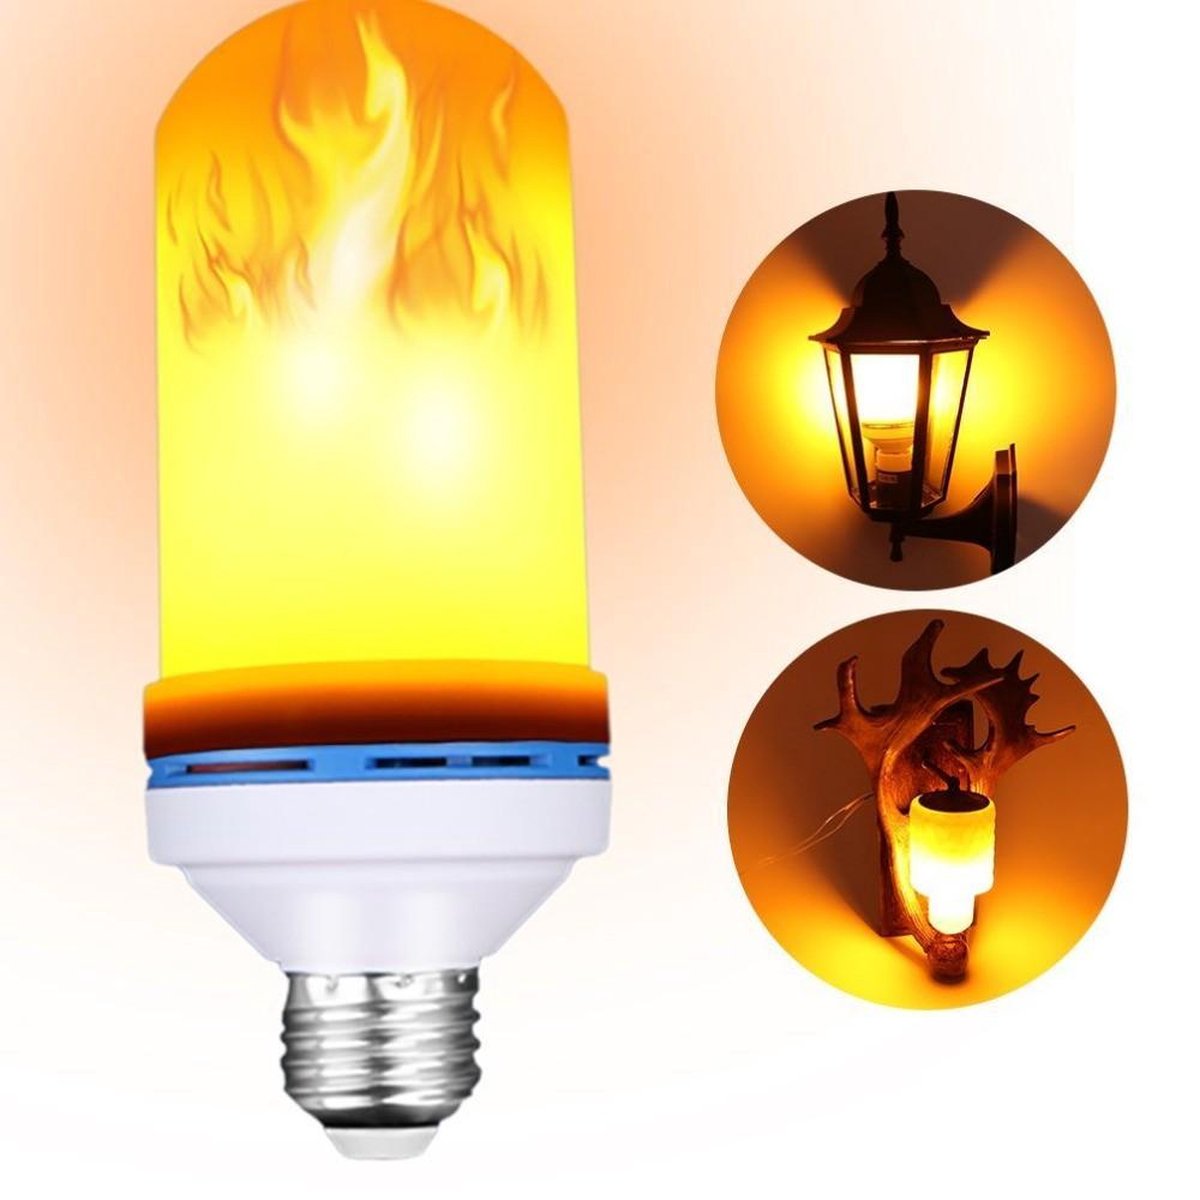 FLAME LED-lamp met E14 bol.com